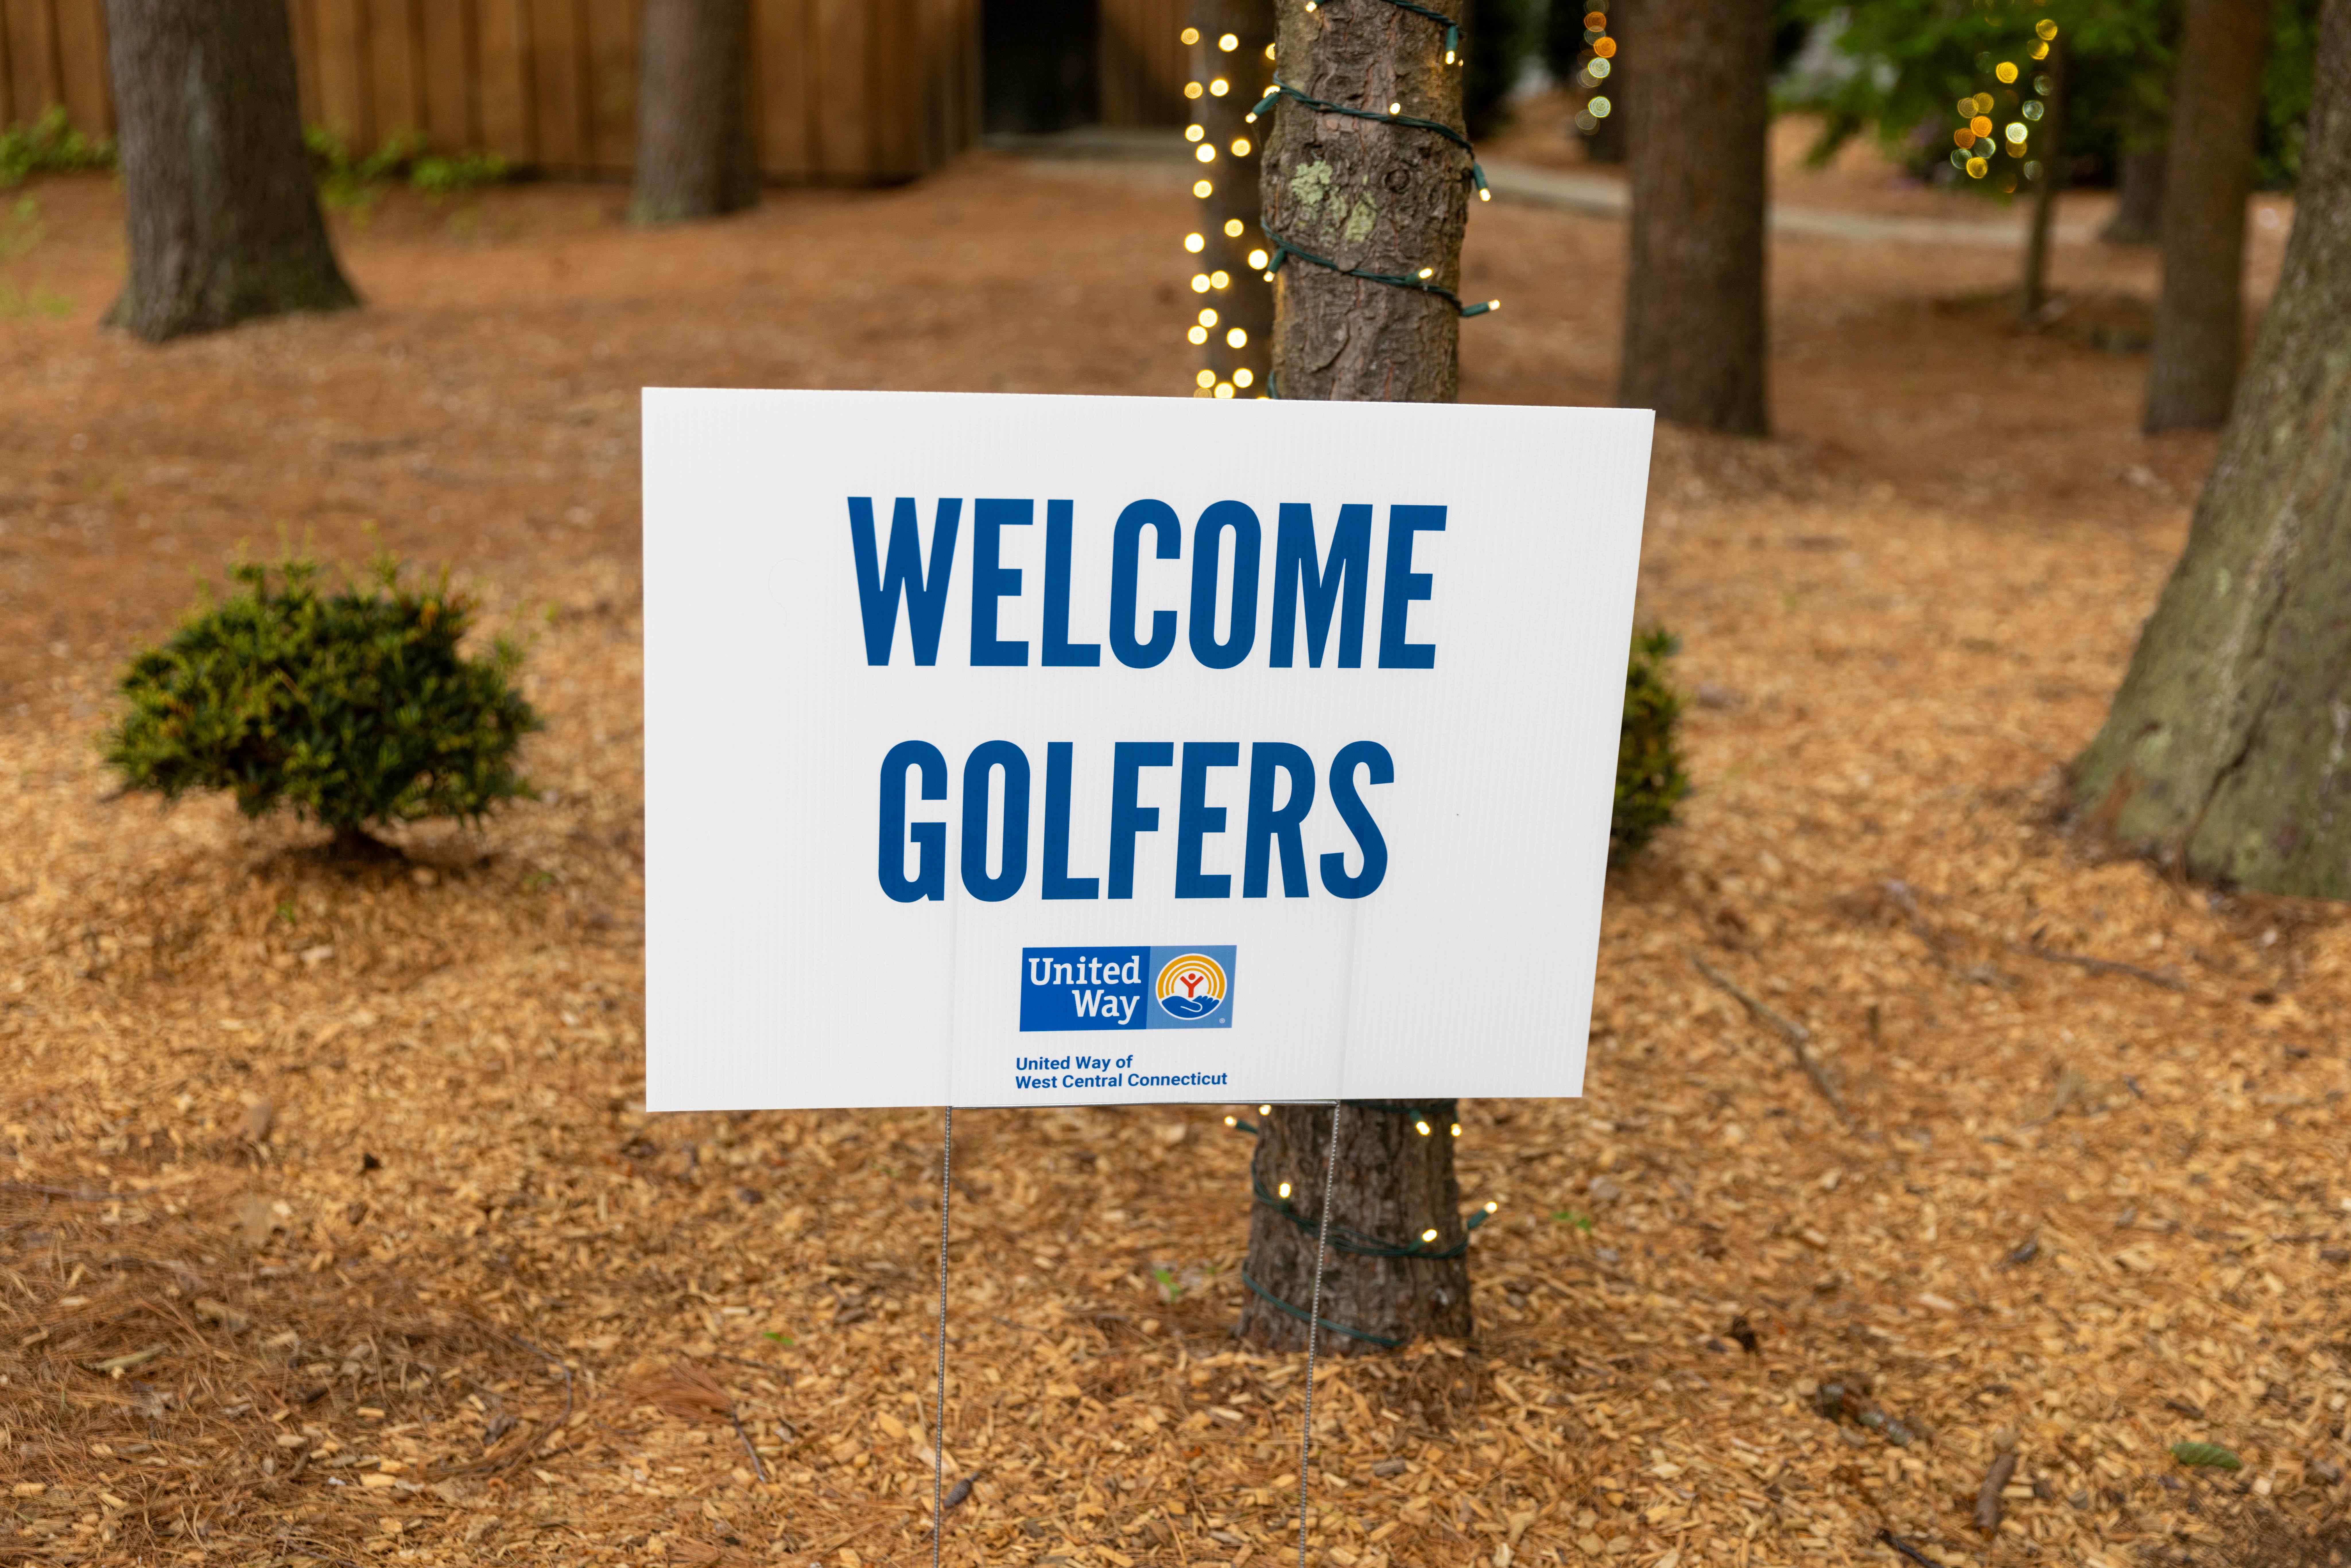 Welcome golfers!